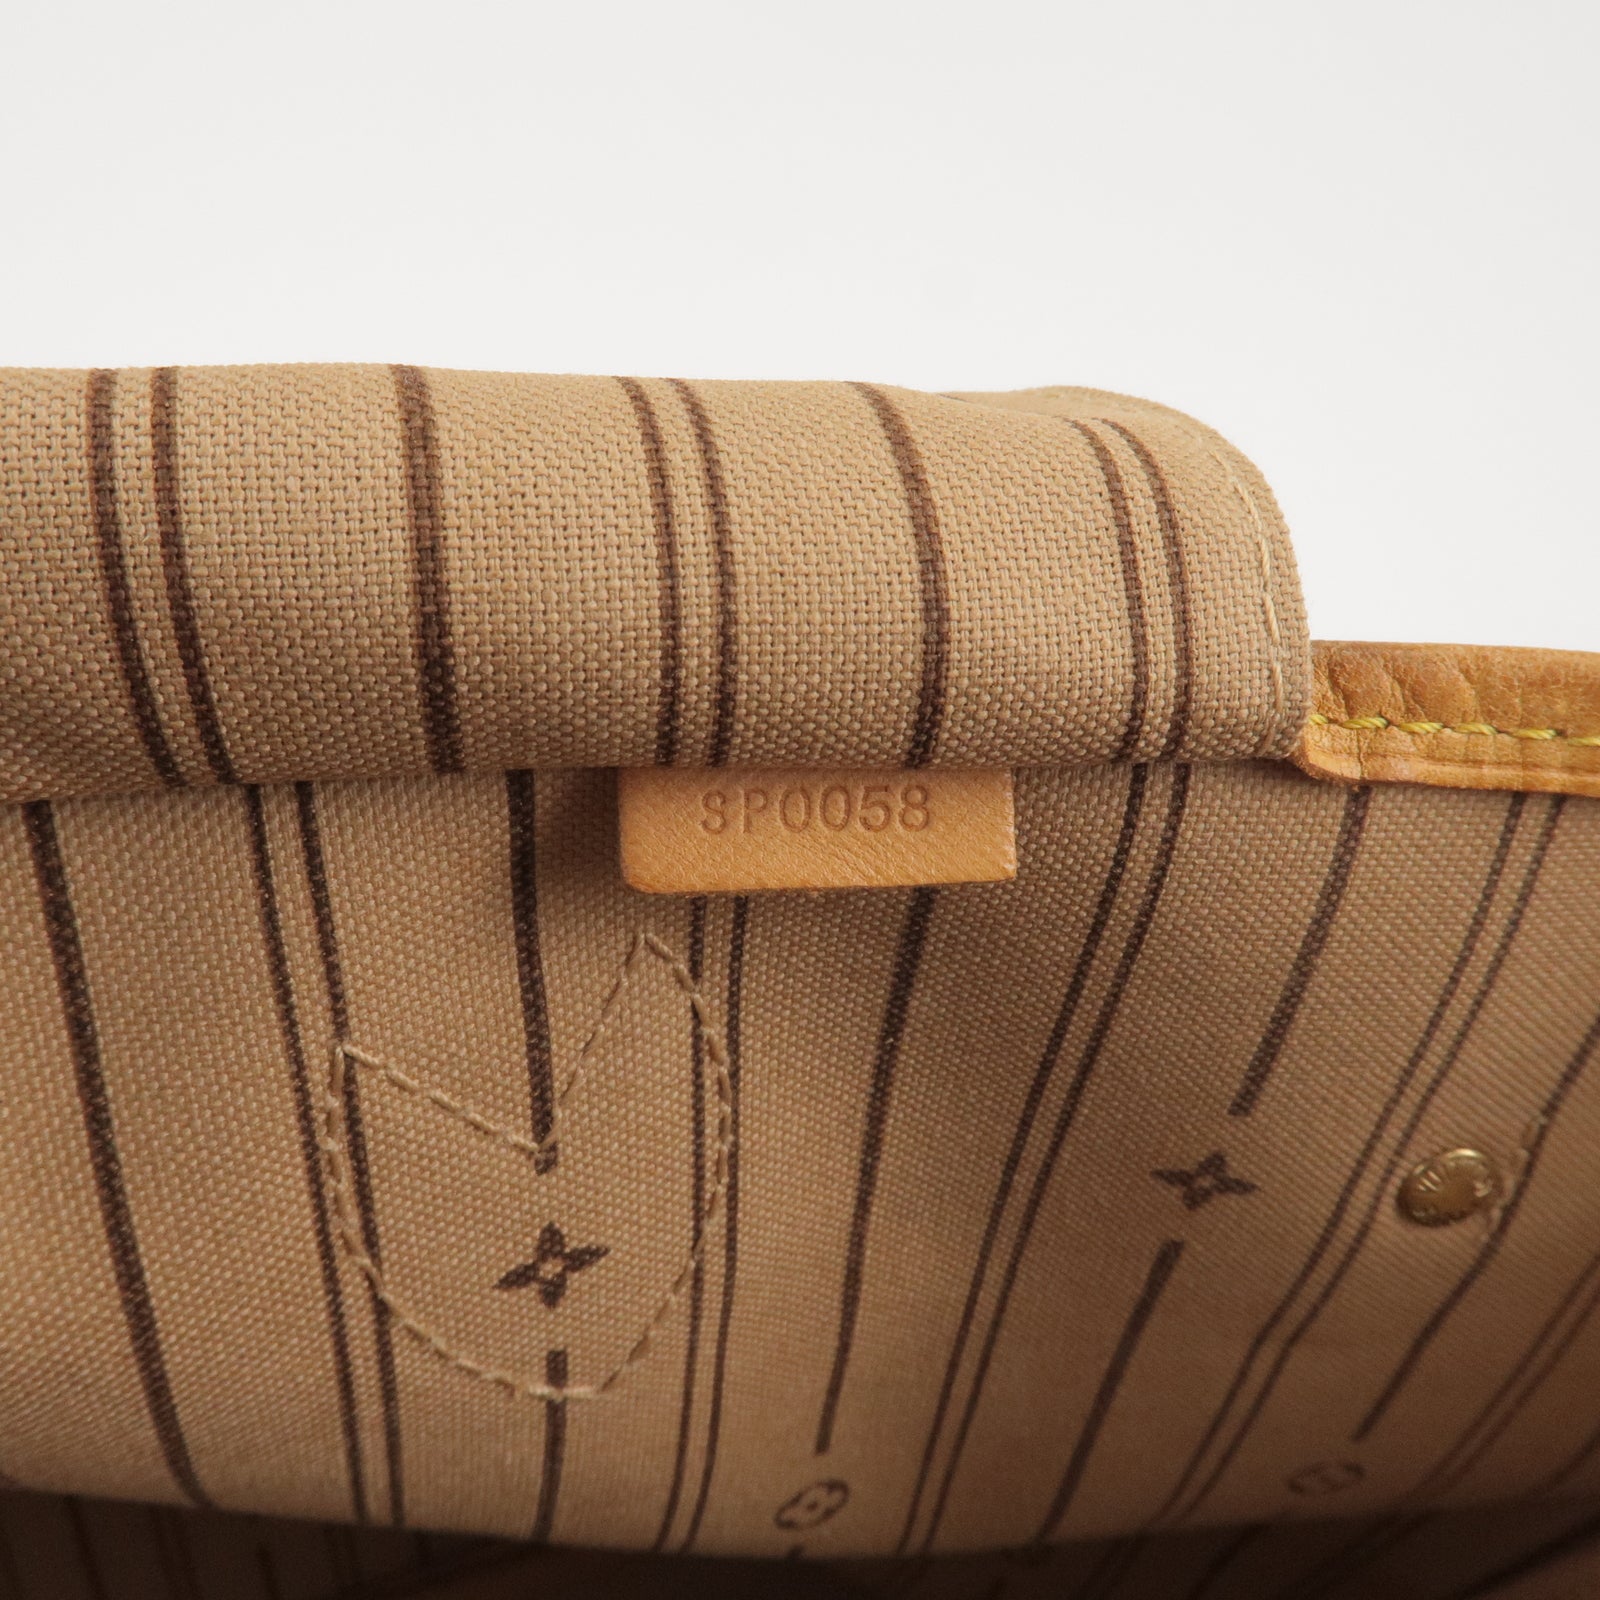 Vuitton - M40156 – dct - Monogram - Tote - Bag - ep_vintage luxury